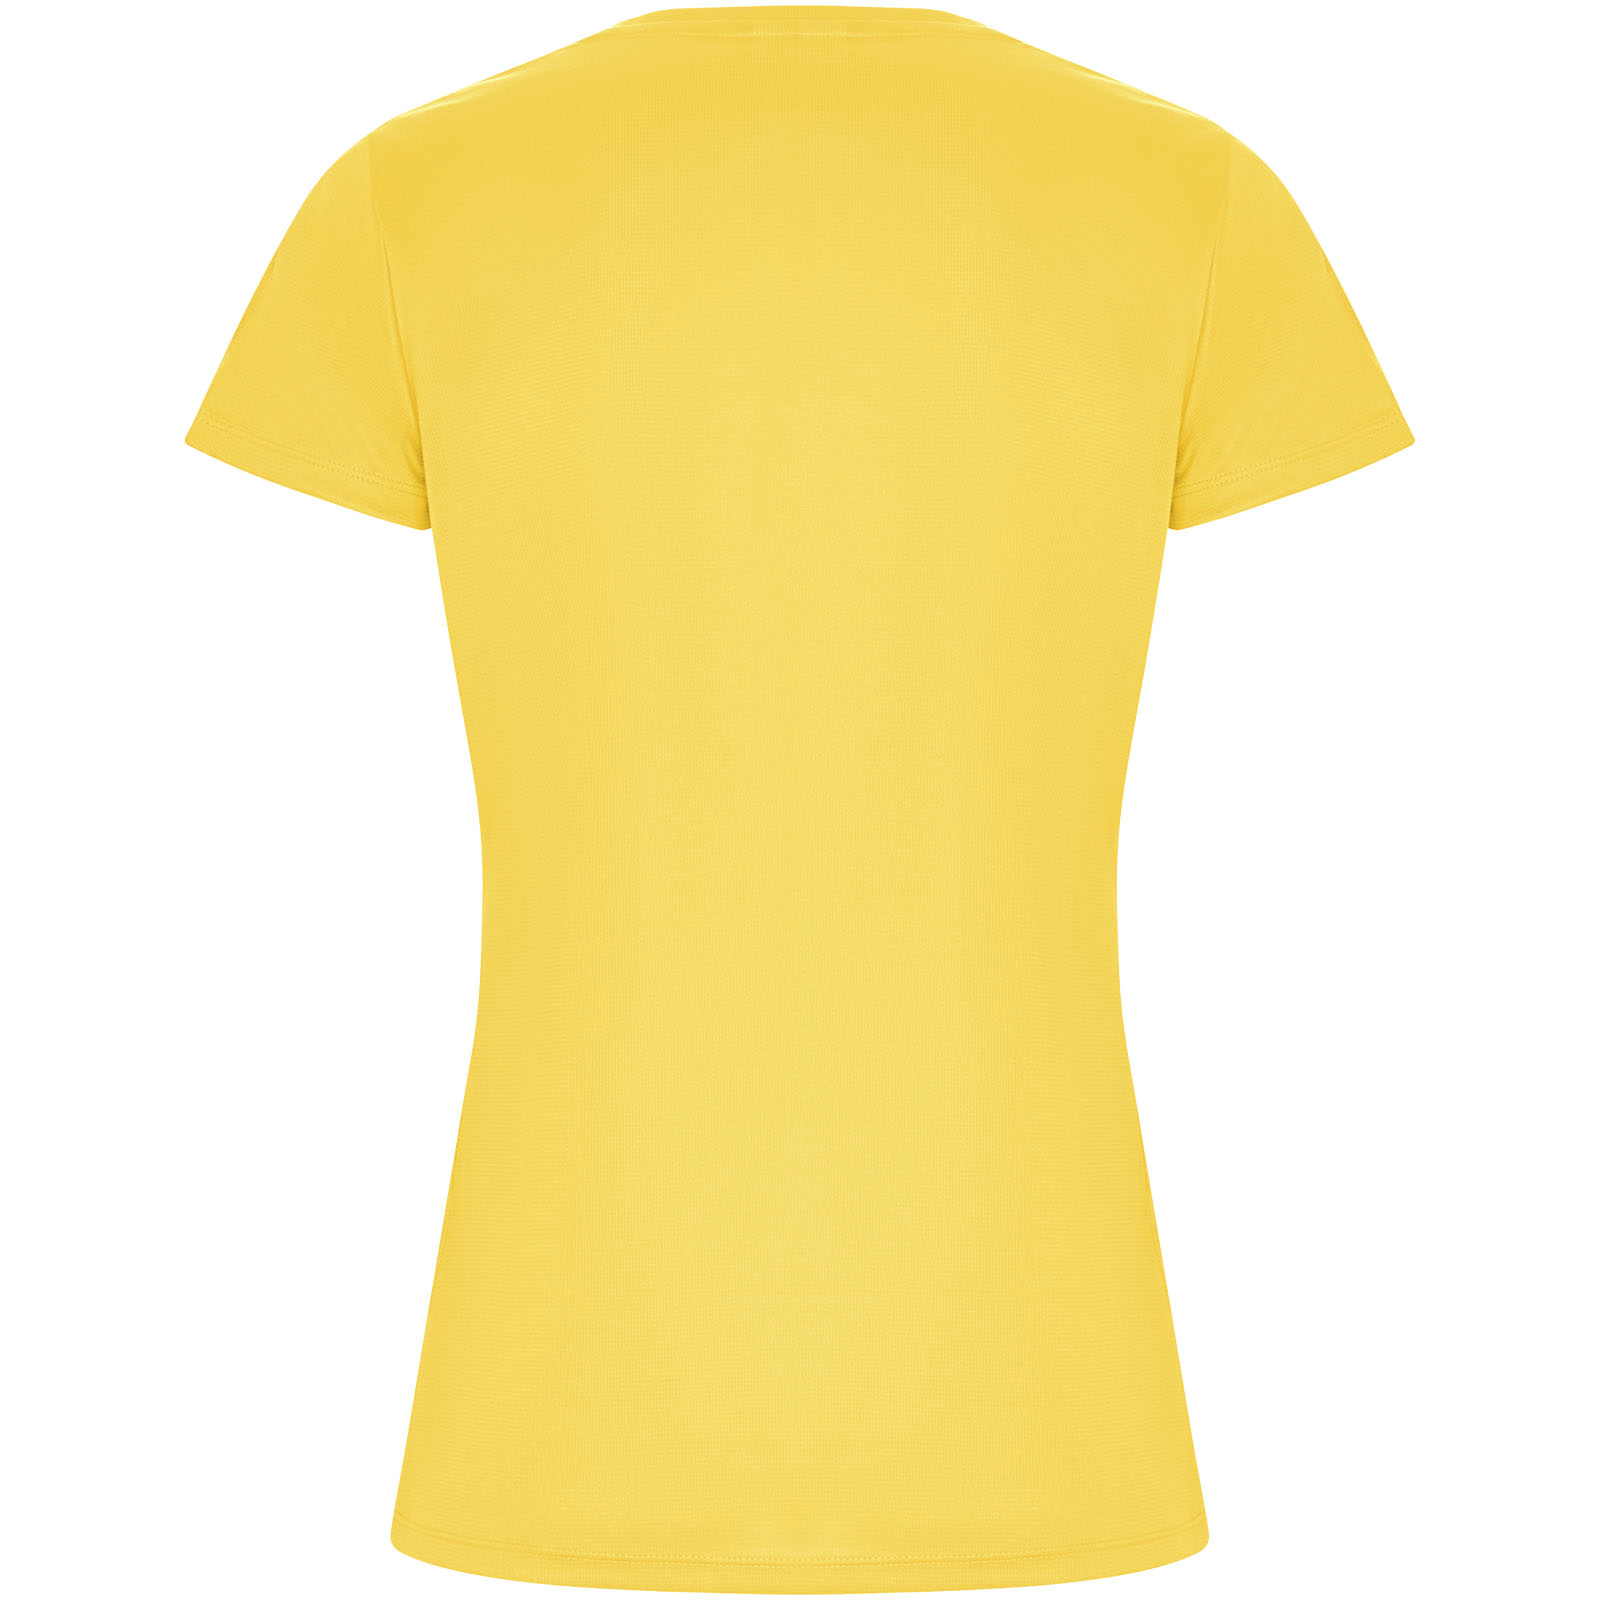 Advertising T-shirts - Imola short sleeve women's sports t-shirt - 1